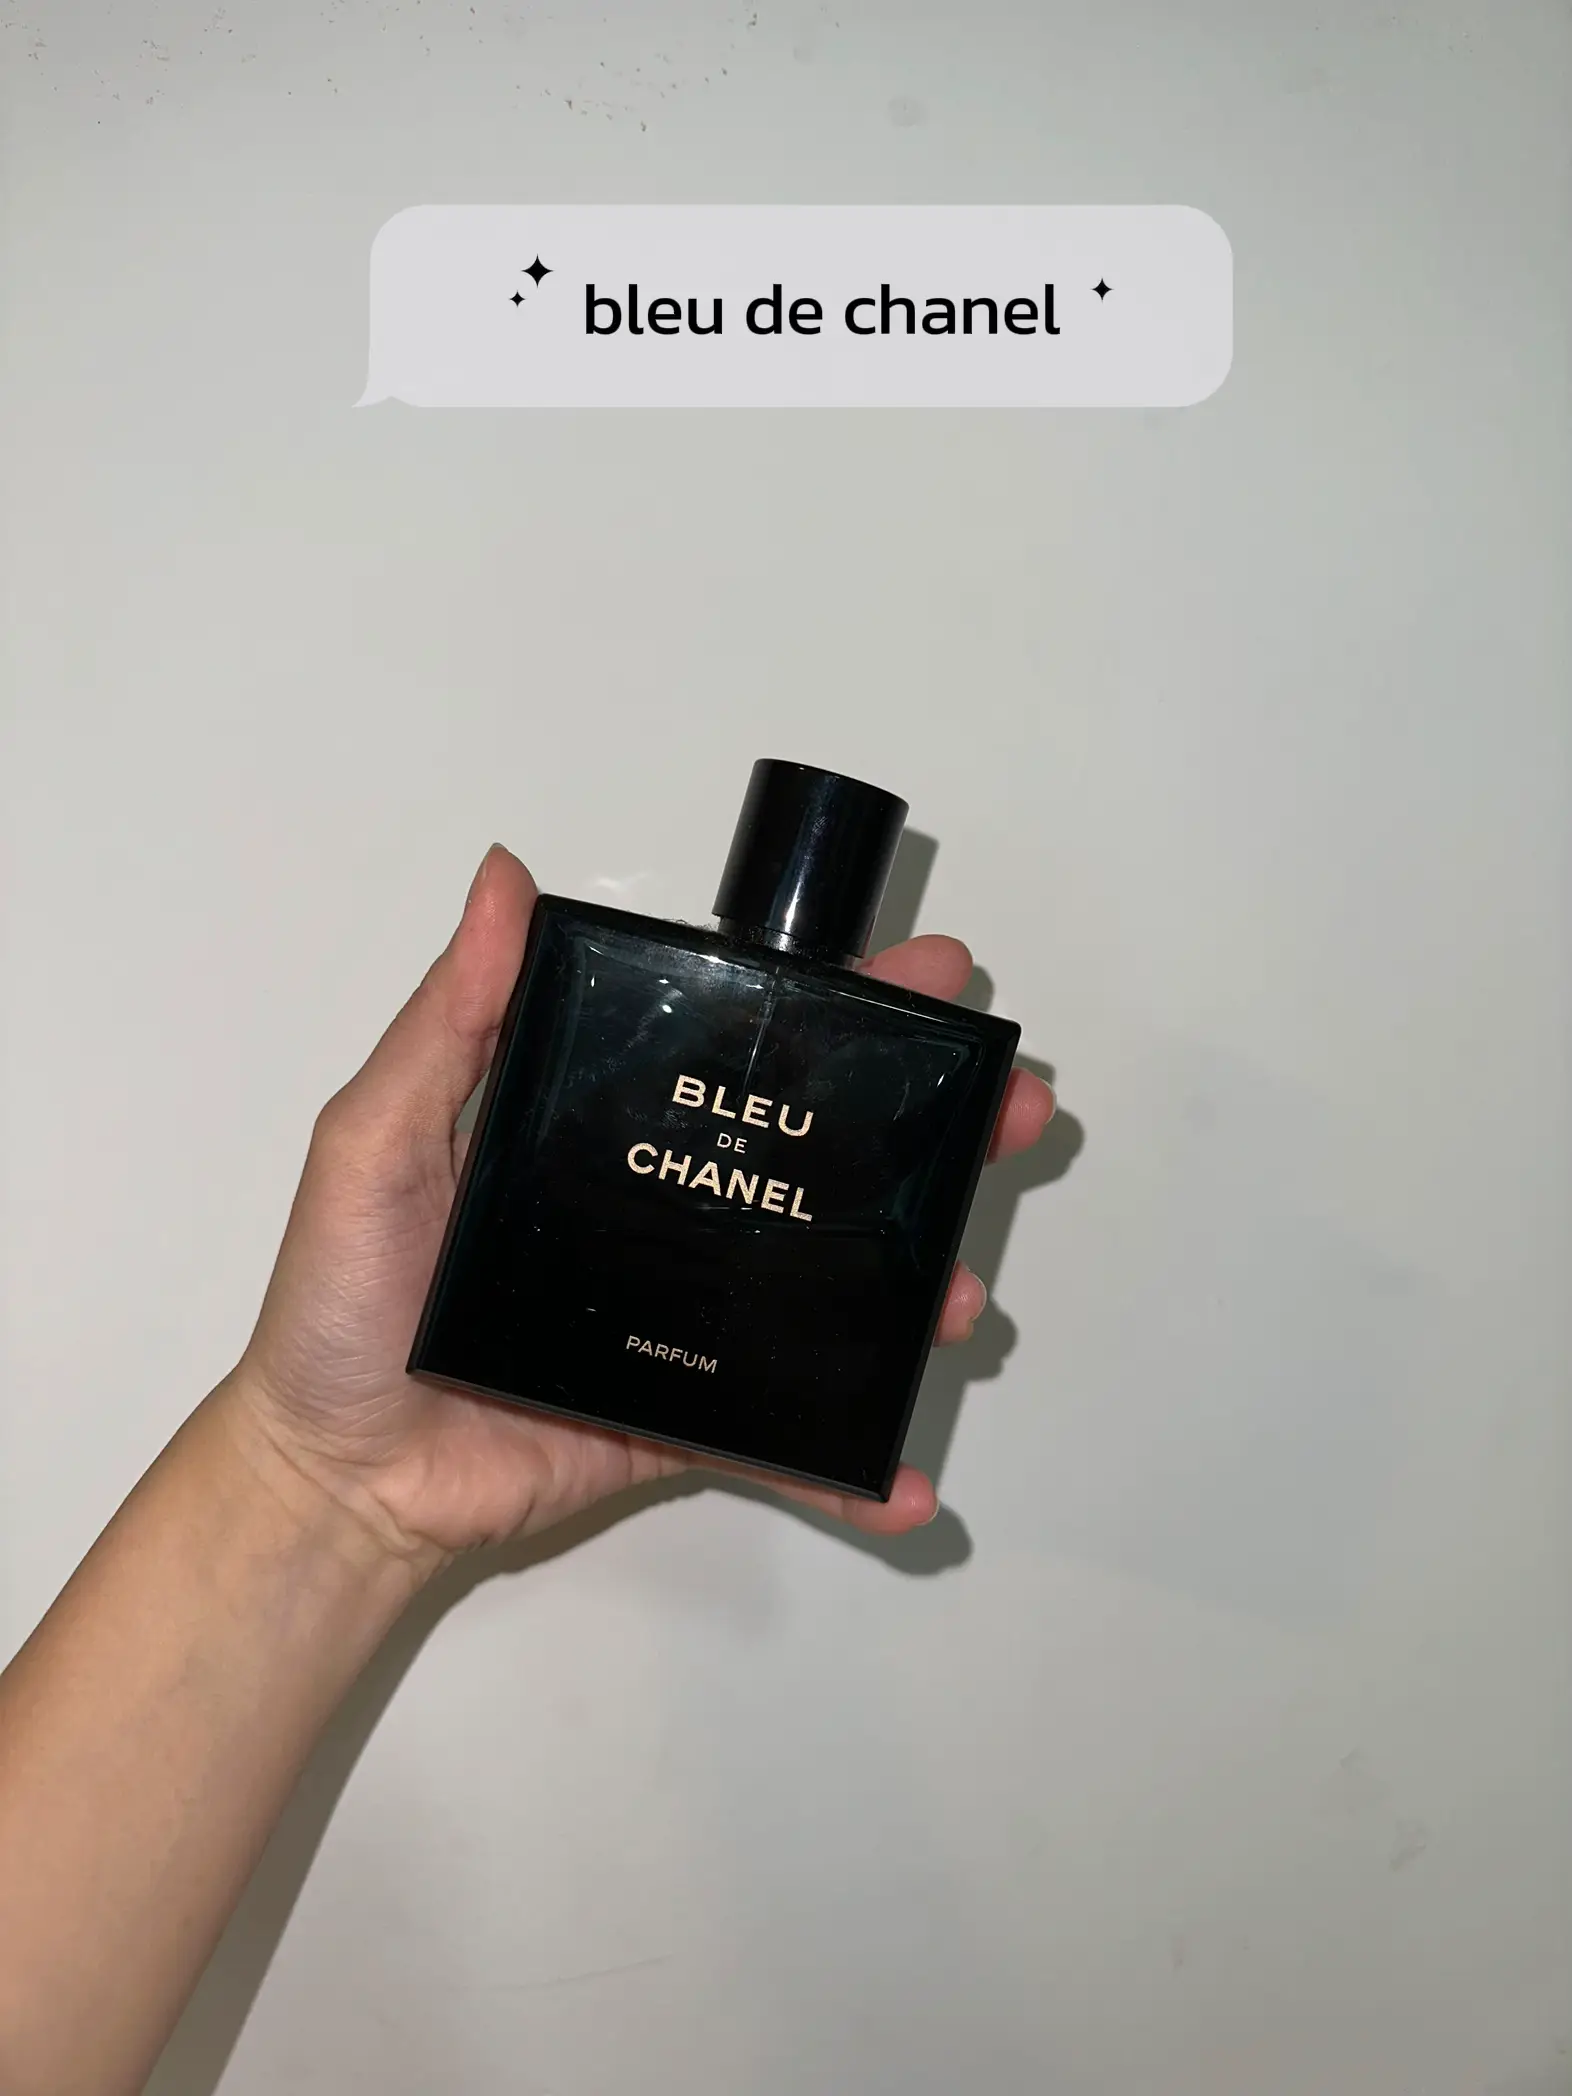 Chanel Bleu De Chanel Eau De Toilette Spray 50ml/1.7oz 